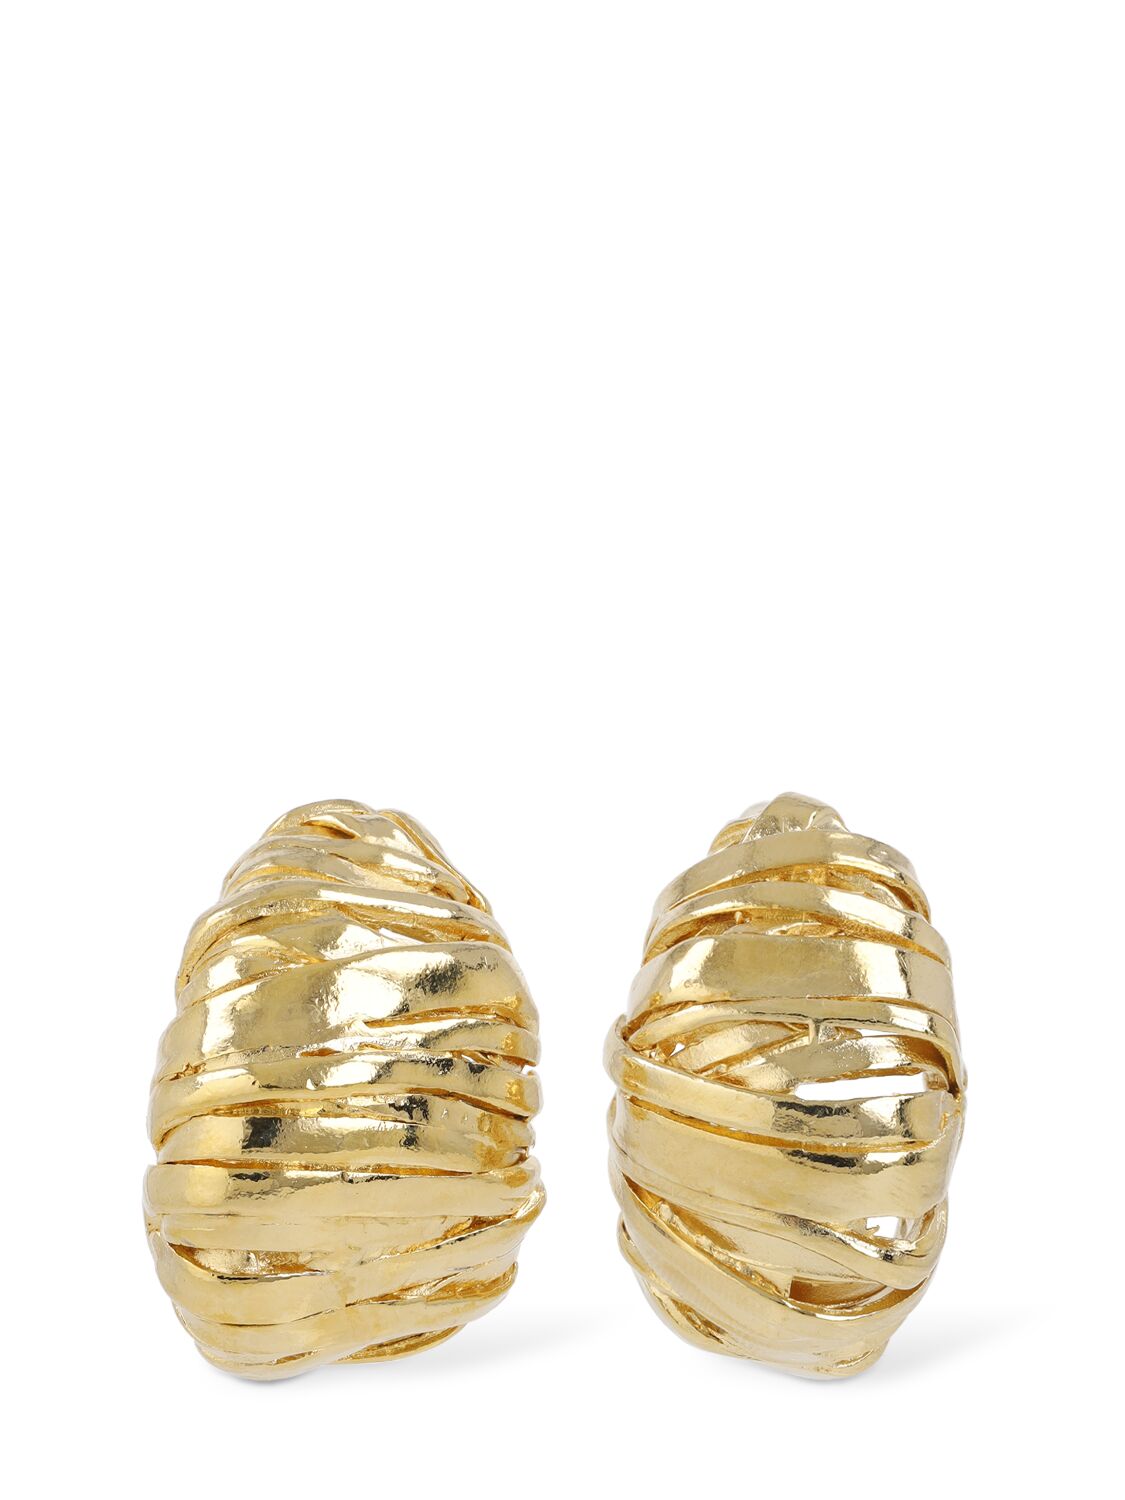 Paola Sighinolfi Blass Earrings In Gold